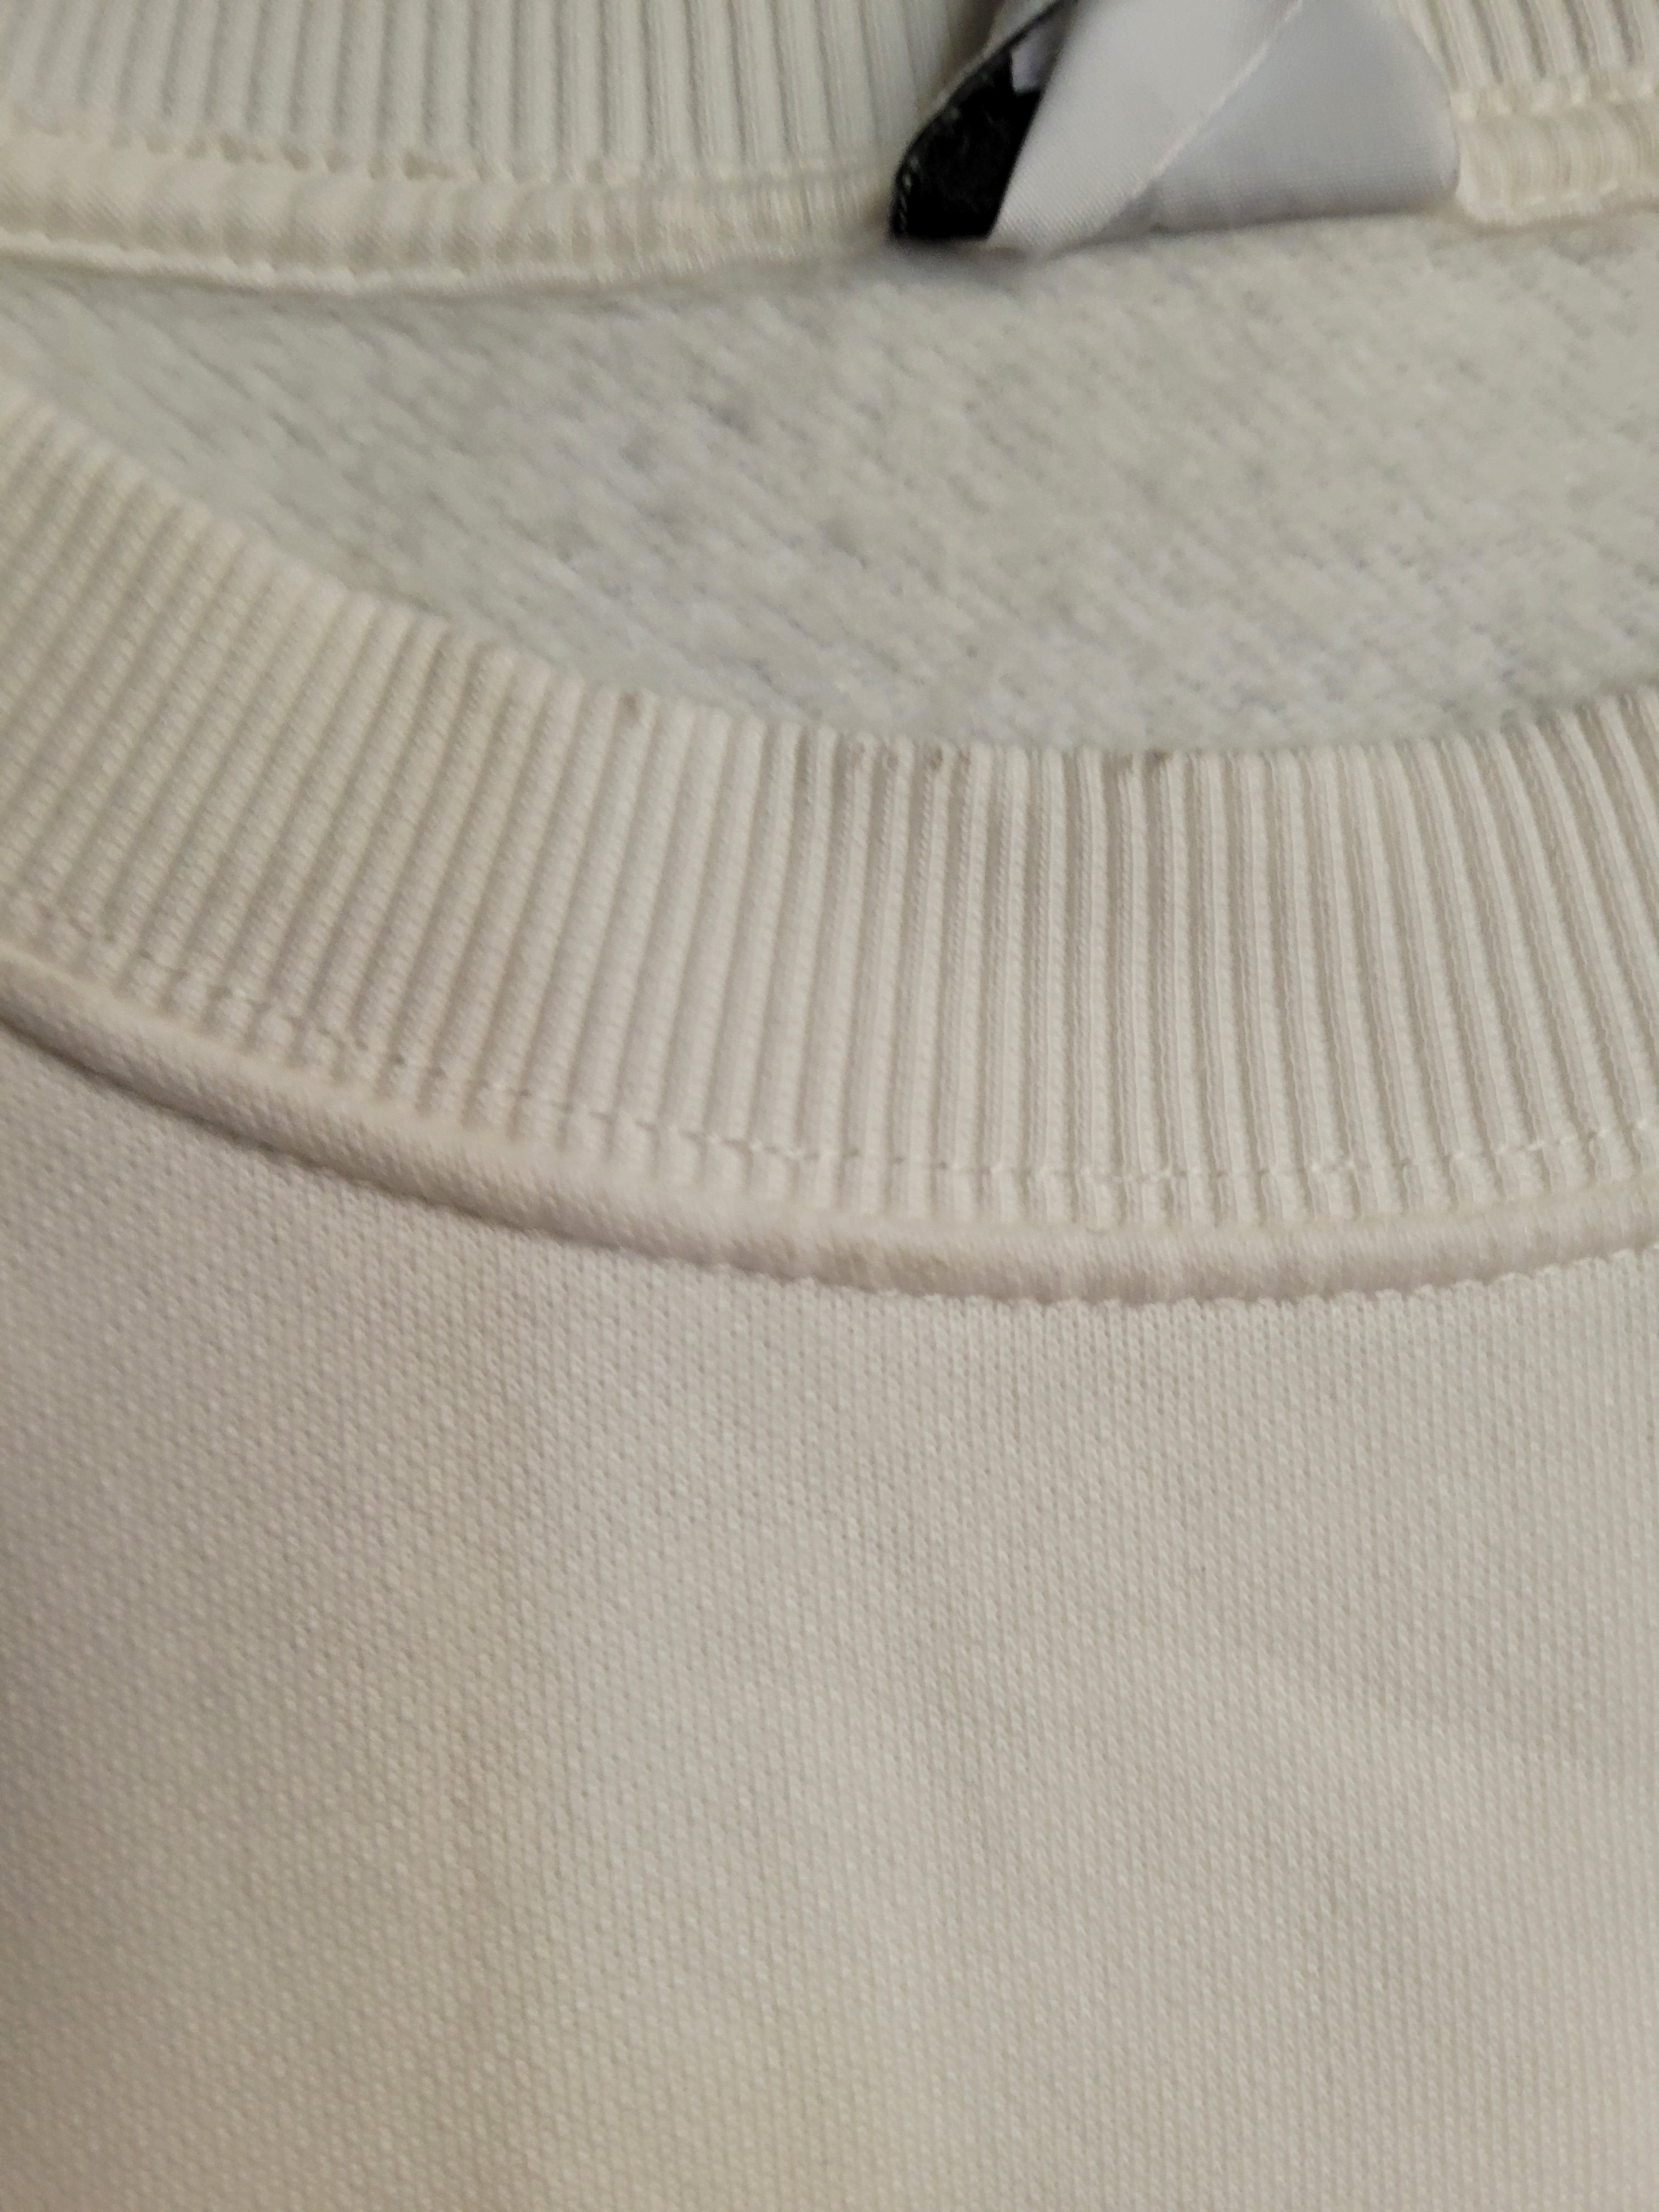 Nike NSW Fleece Crewneck Sweatshirt in Sail & Black Size Small